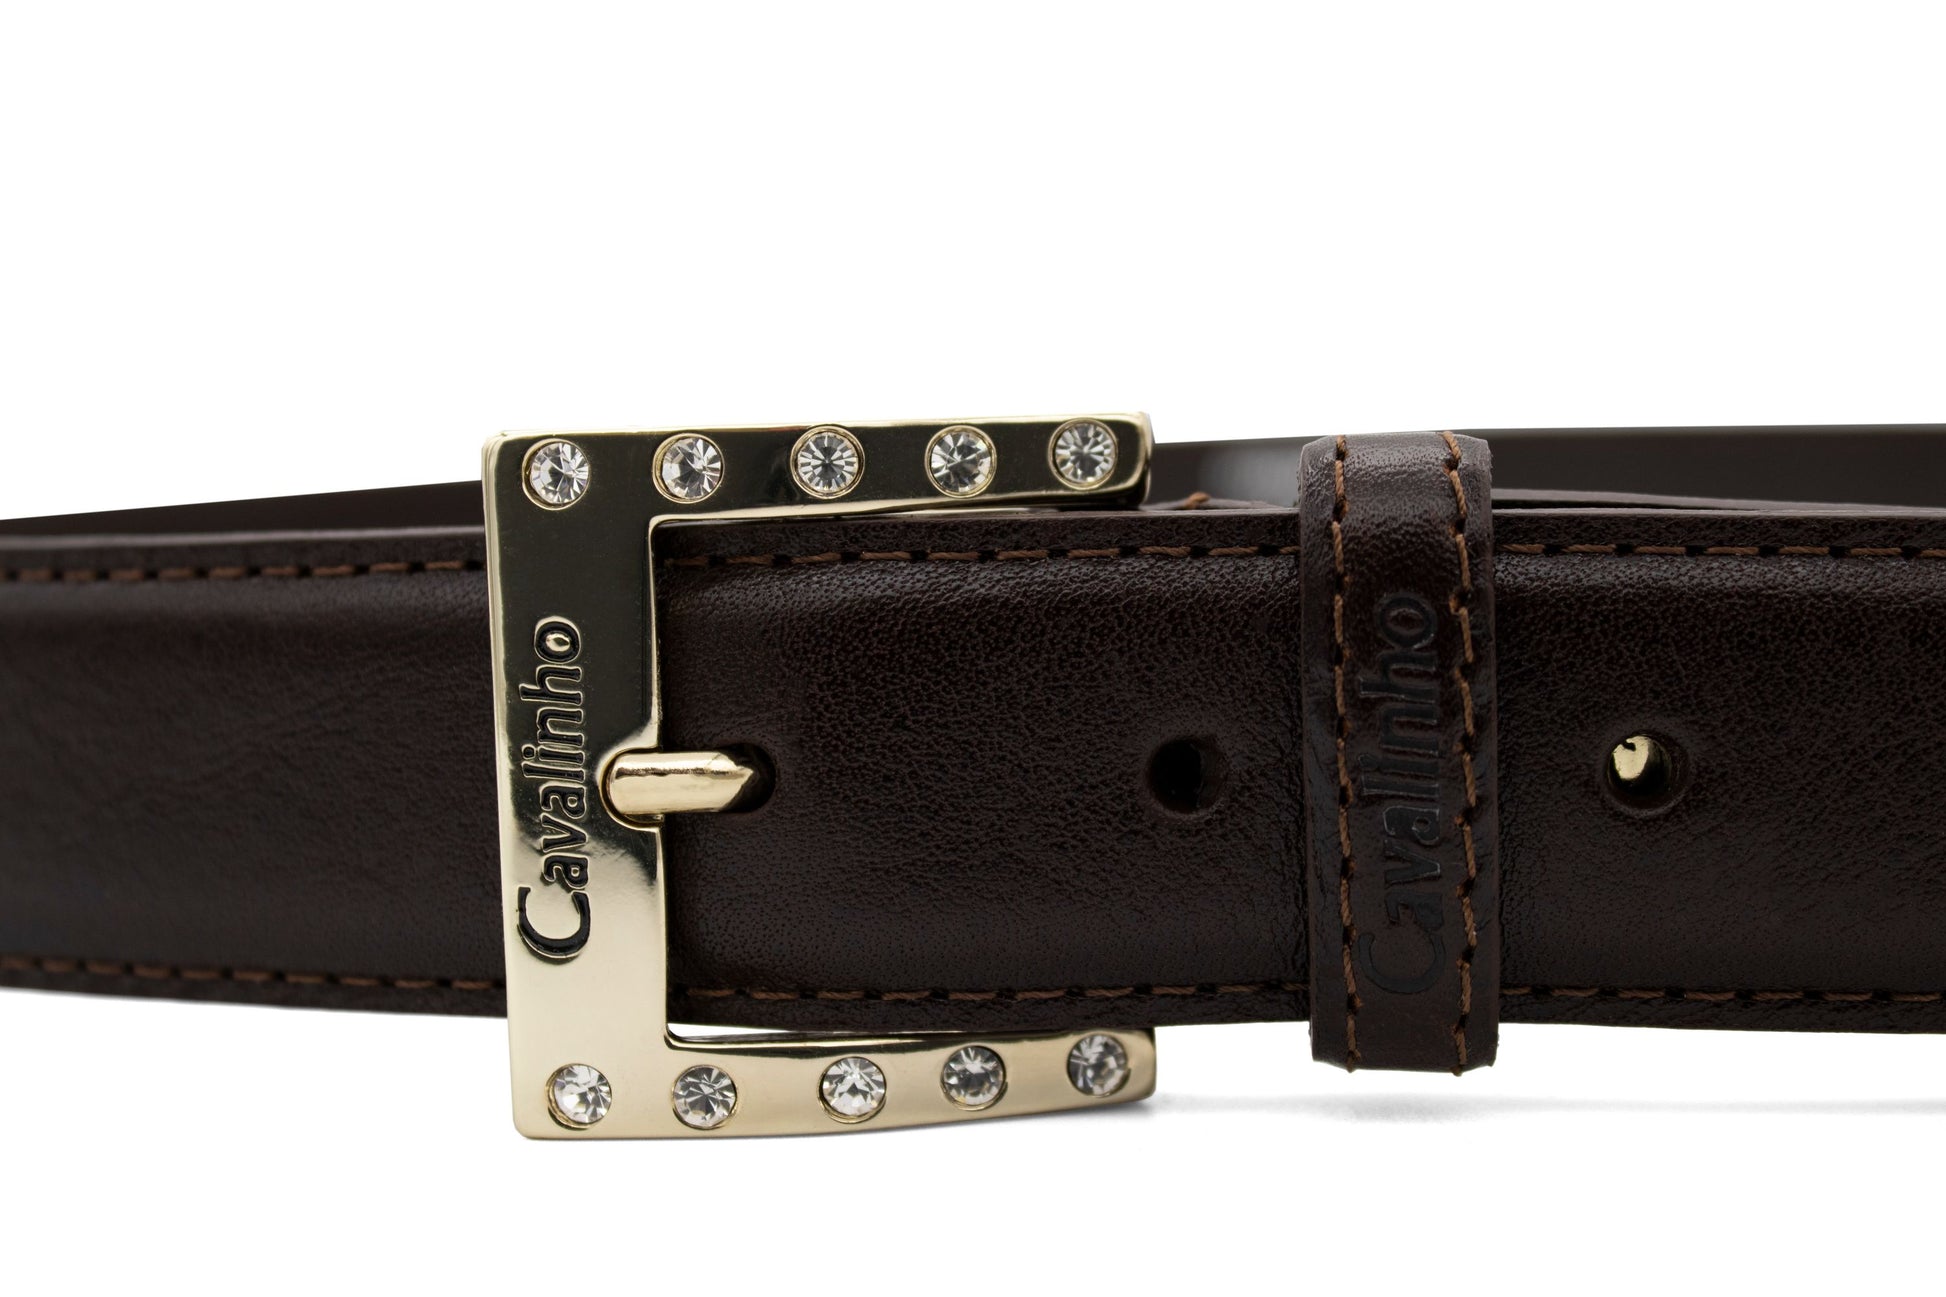 Cavalinho Classic Leather Belt - Brown Gold - 58010905.02_2_f75d8c25-7ce3-4616-be7f-f2f943535c88